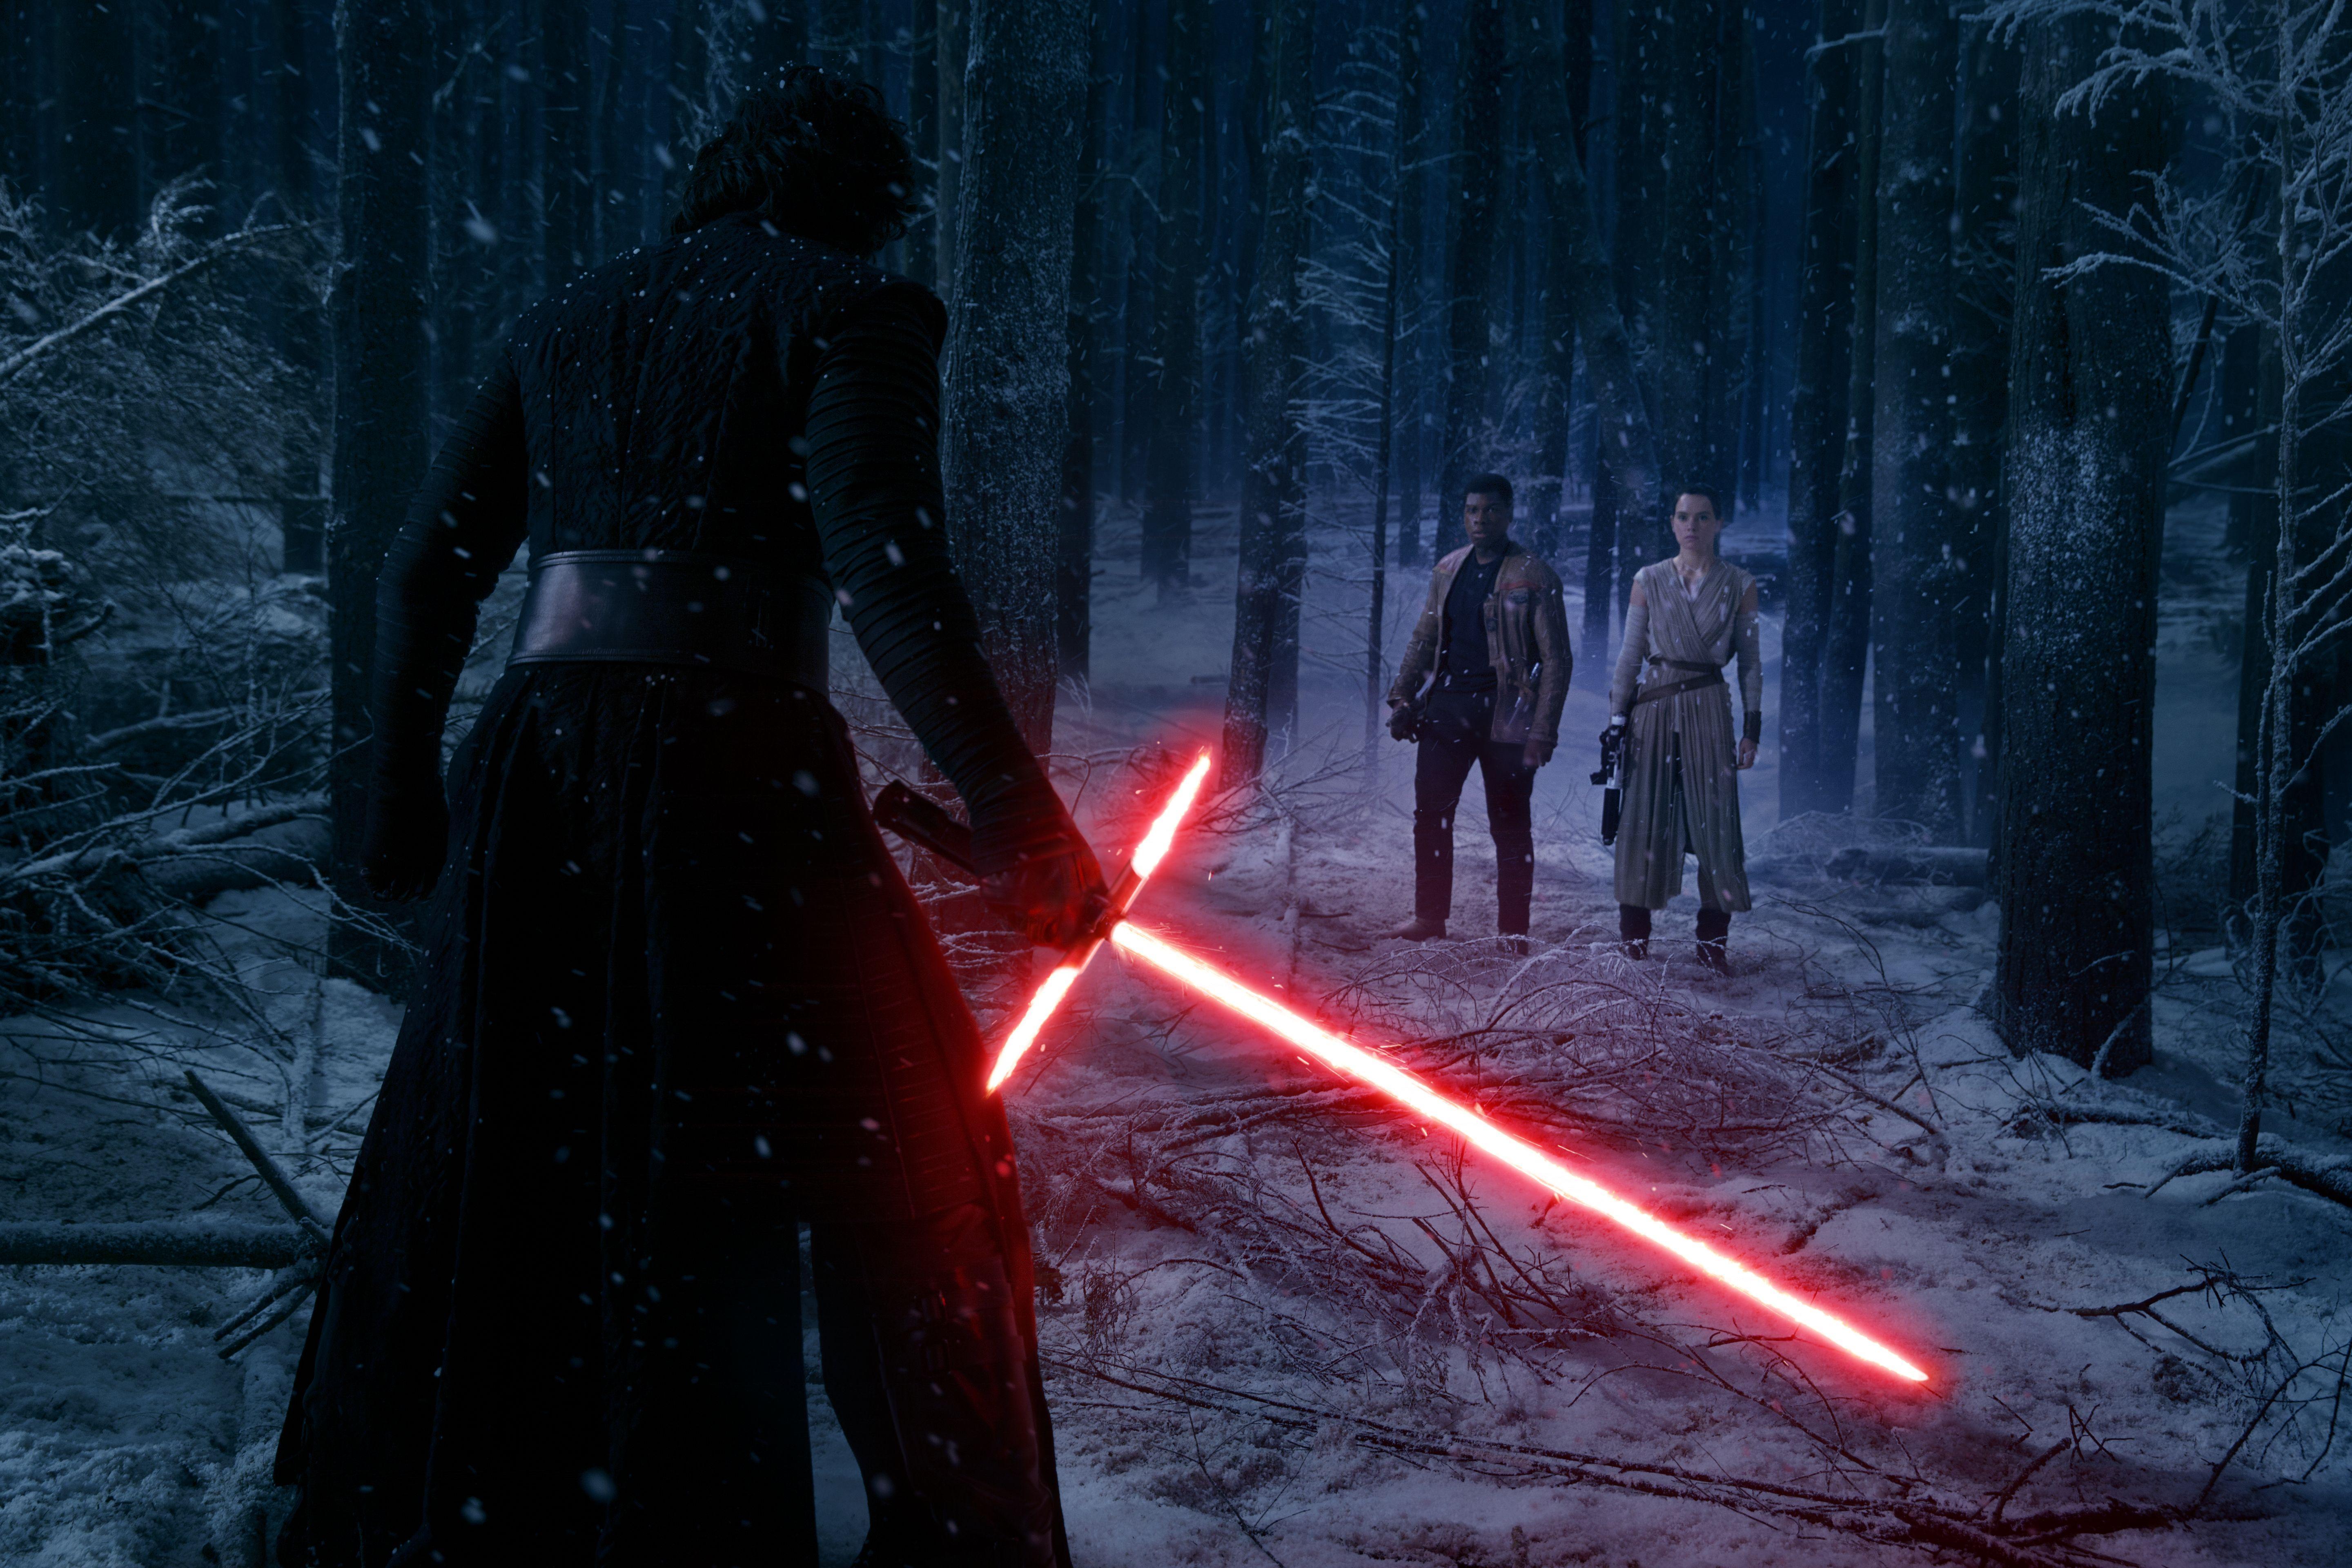 Star Wars Episode VII: The Force Awakens 5k Retina Ultra HD